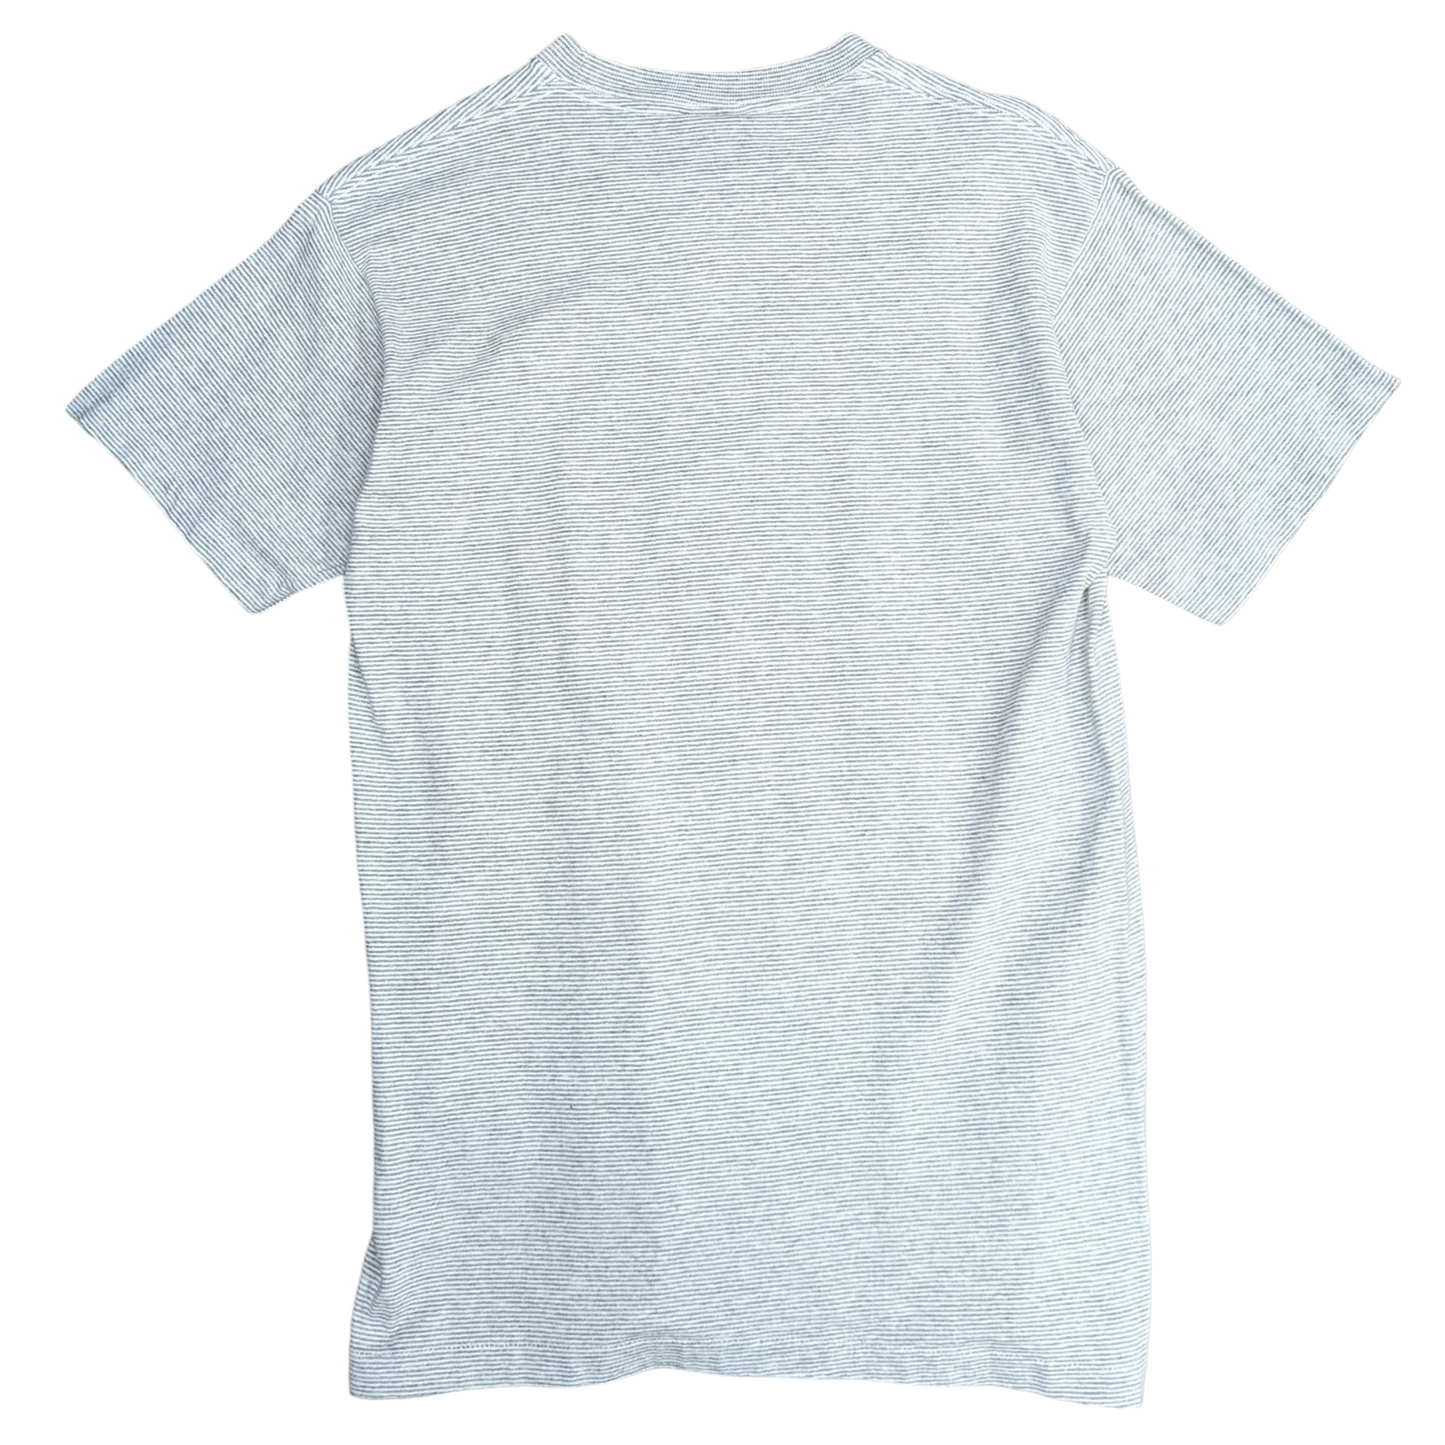 90s Beverley Hills Single Stitch T-Shirt Size M